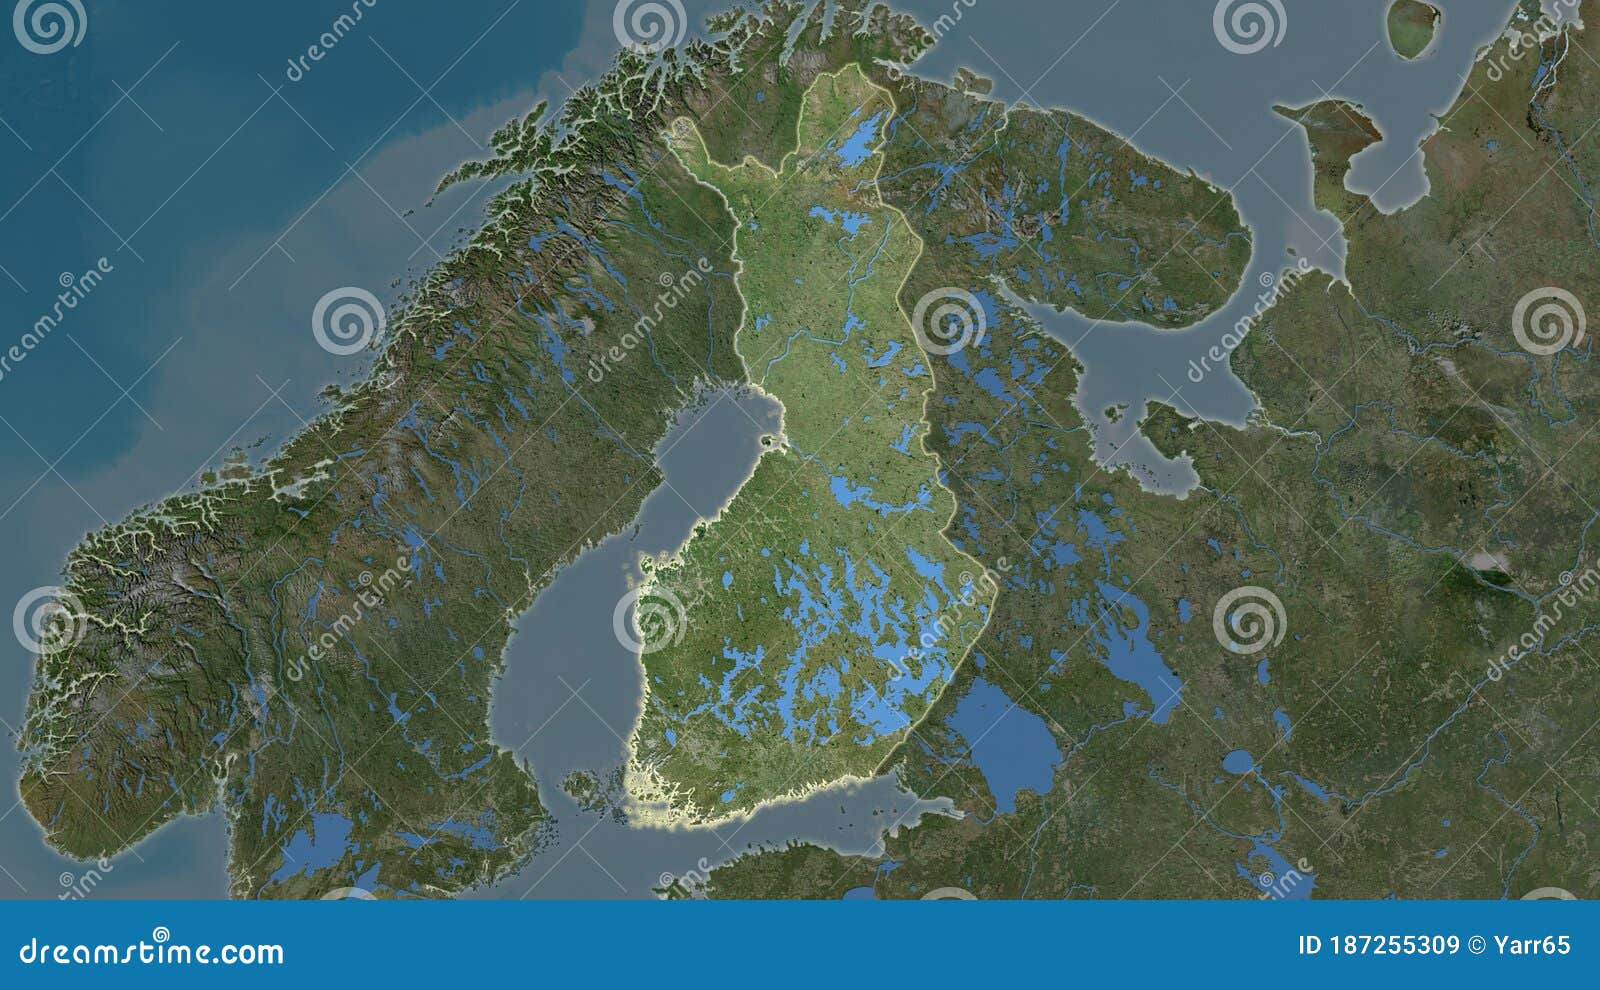 finland tourism satellite account